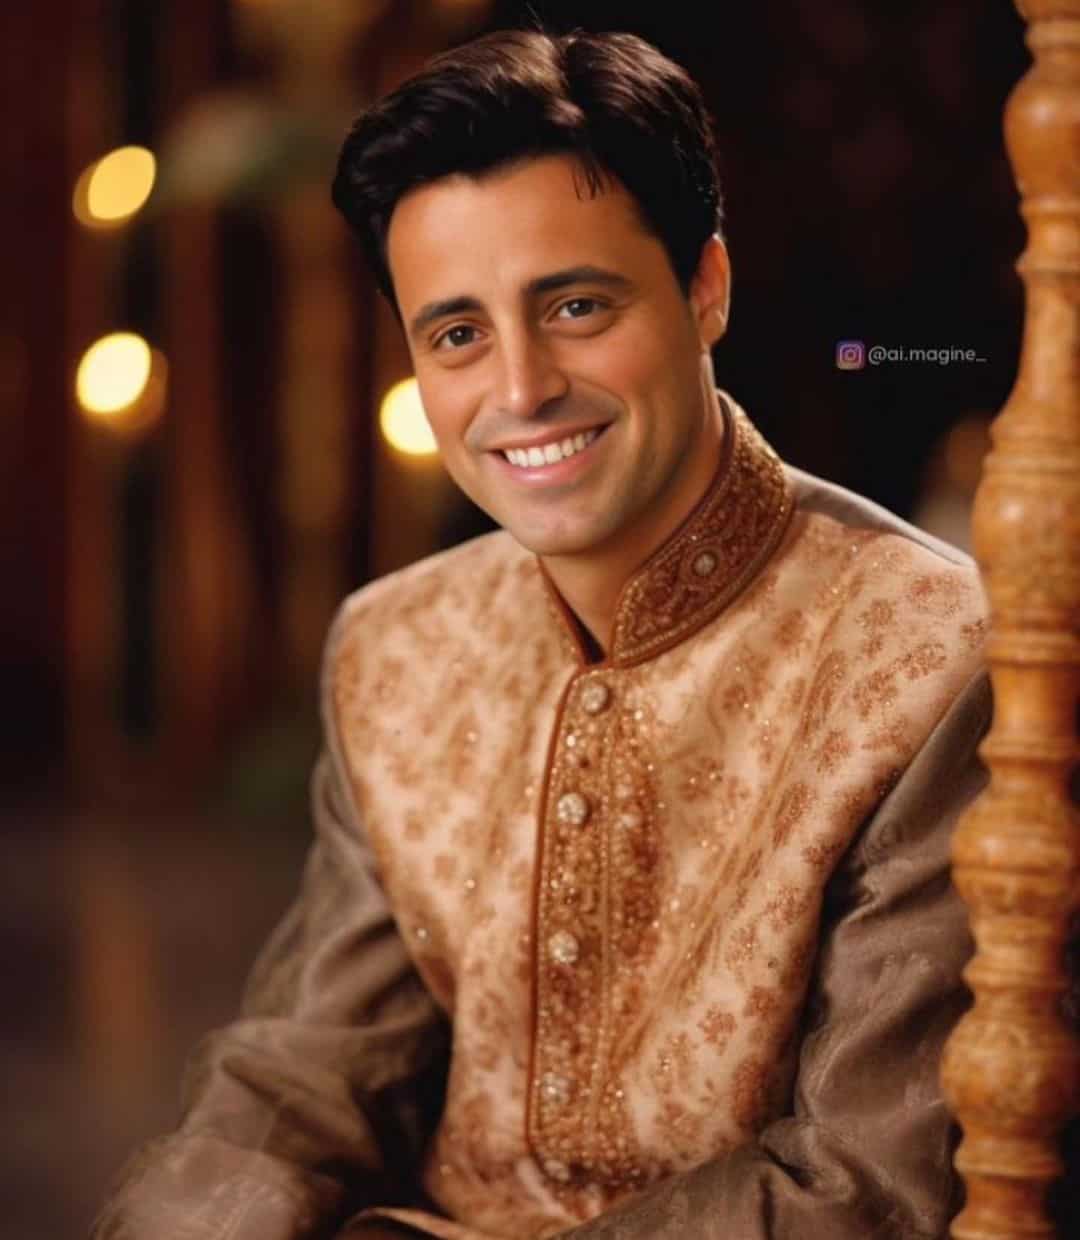 The Indian avatar of Matt LeBlanc as Joey Tribbiani.